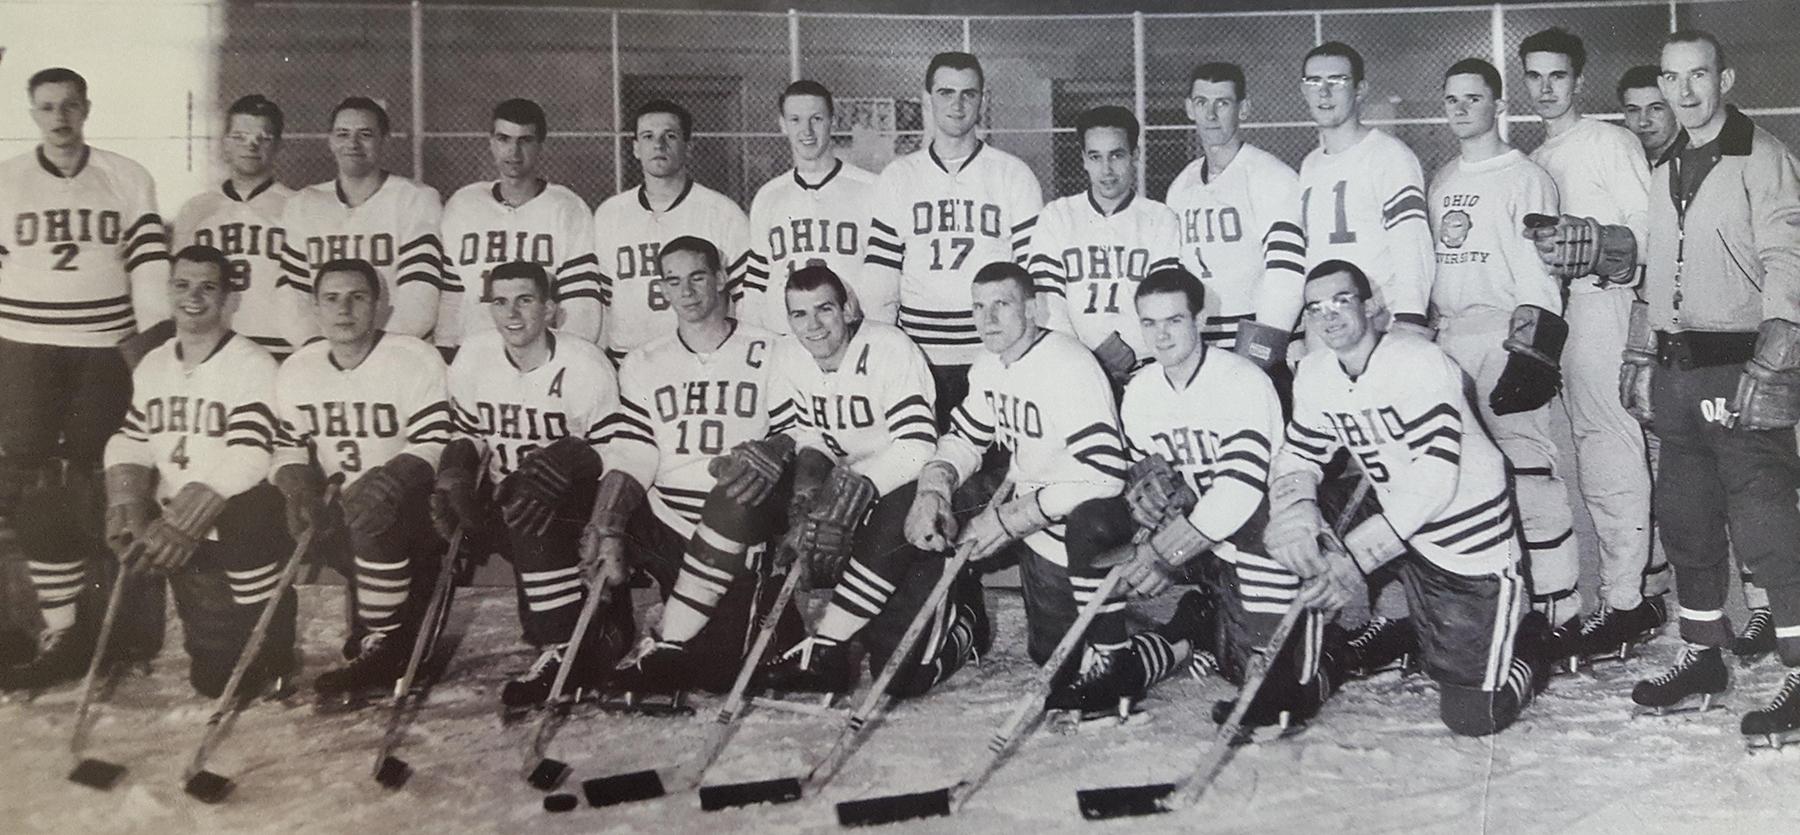 1958-1959 OHIO Hockey team poses for a portrait